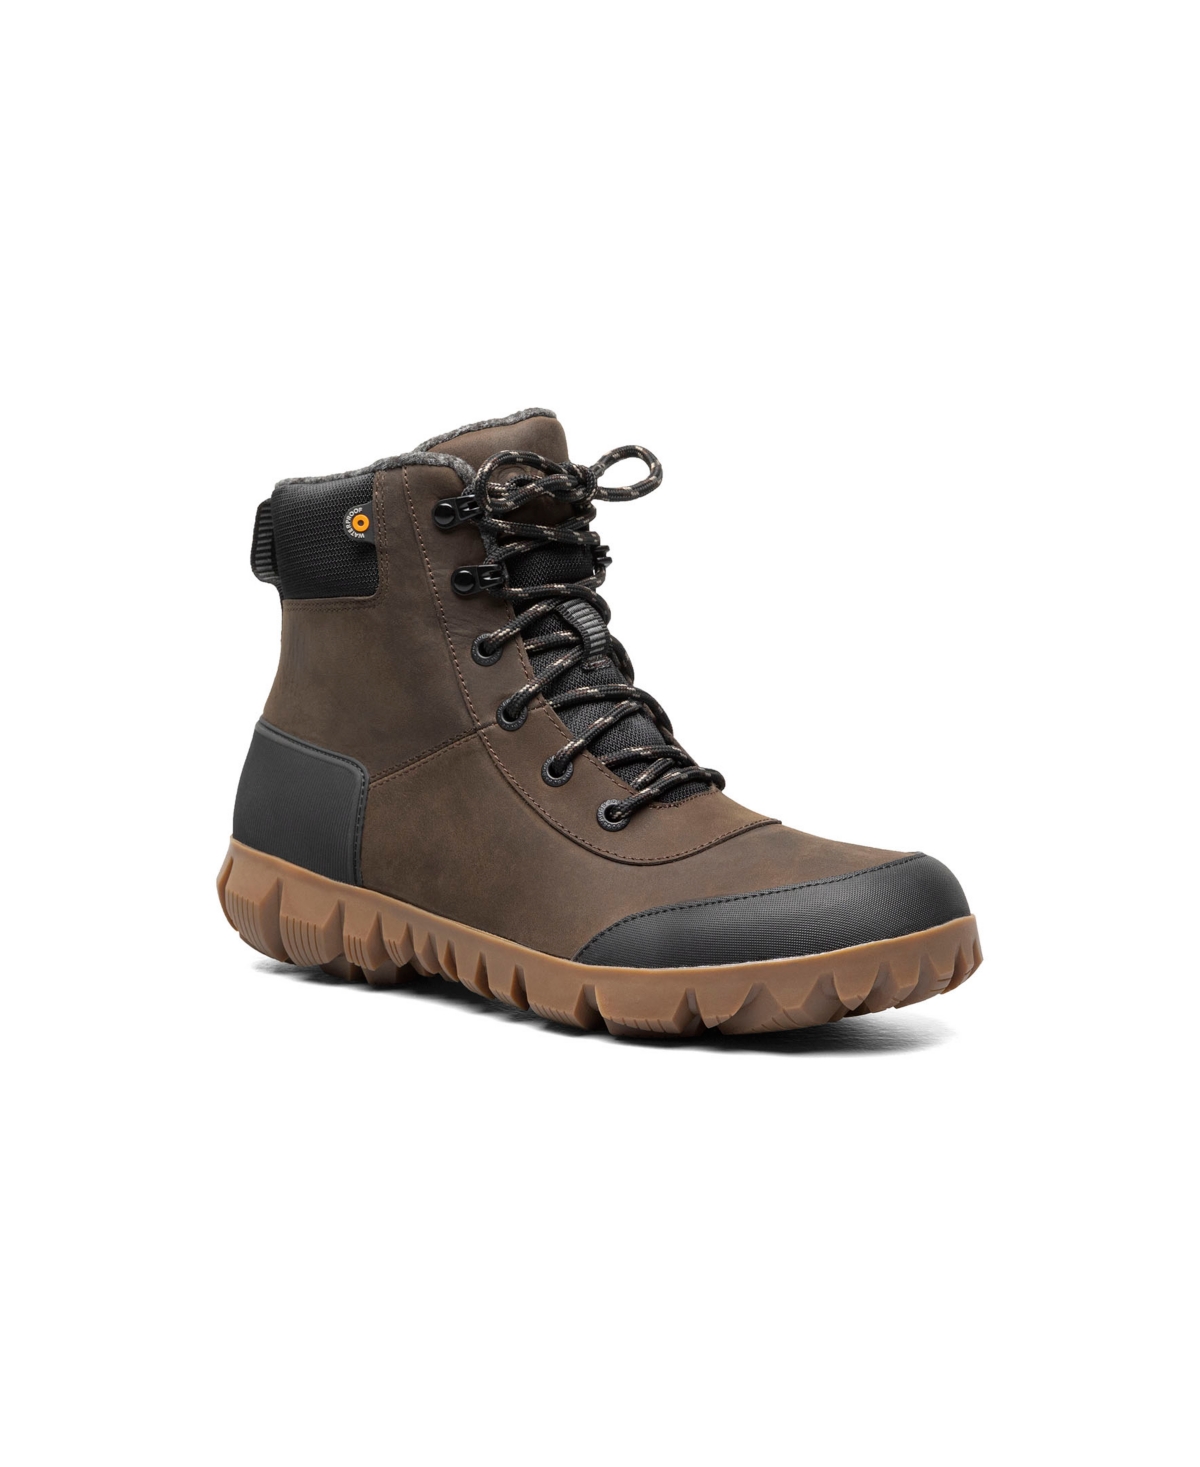 Men's Arcata Urban Leather Mid Slip-Resistant Boot - Chocolate